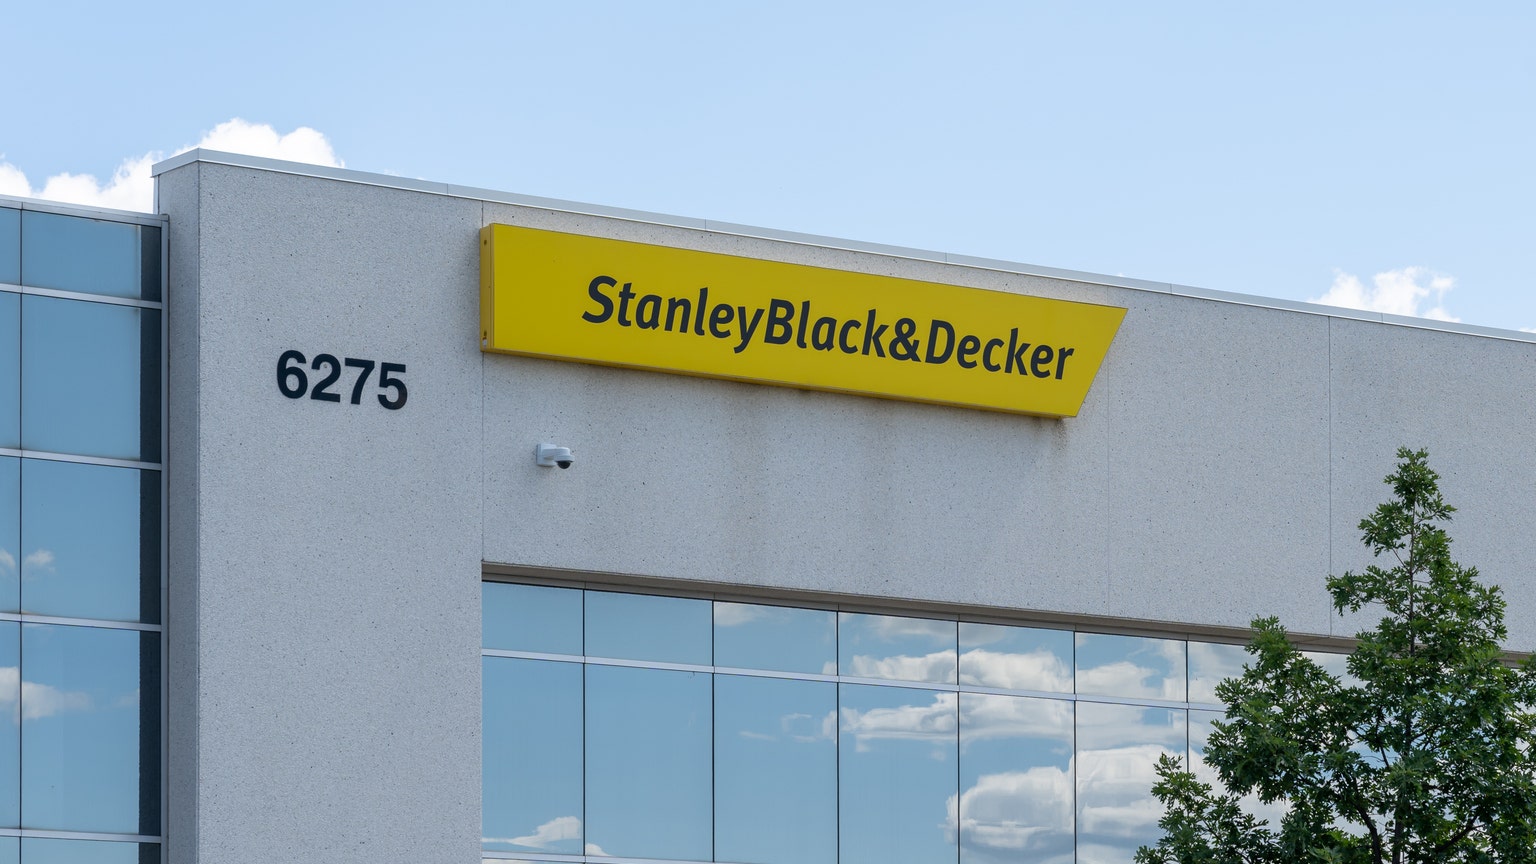 Stanley Black & Decker Reports First Quarter Earnings